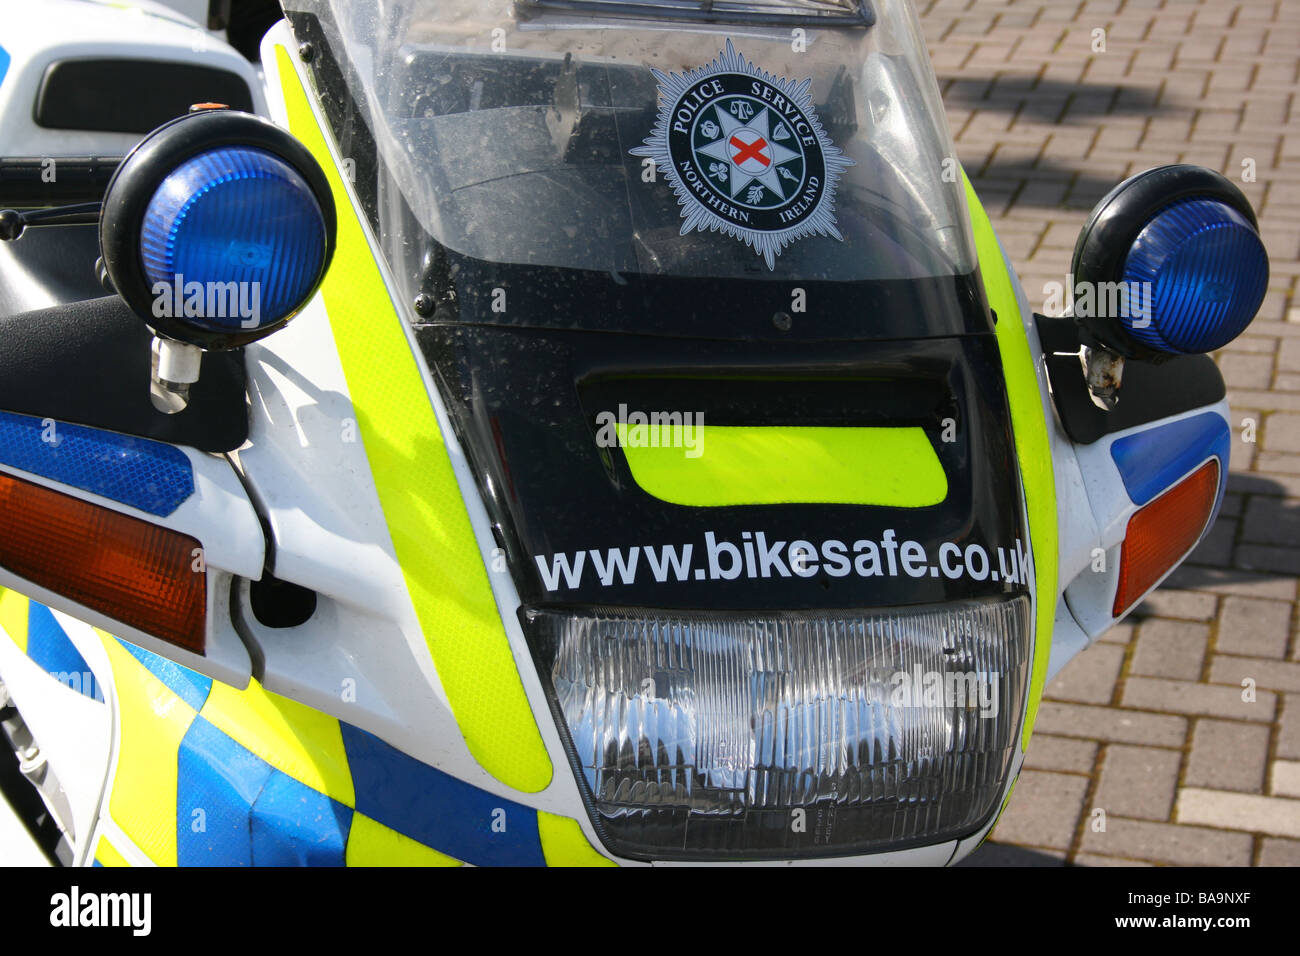 PSNI Honda Pan-European ST1100 police motorcycle of the PSNI (Police Service of Northern Ireland) Stock Photo